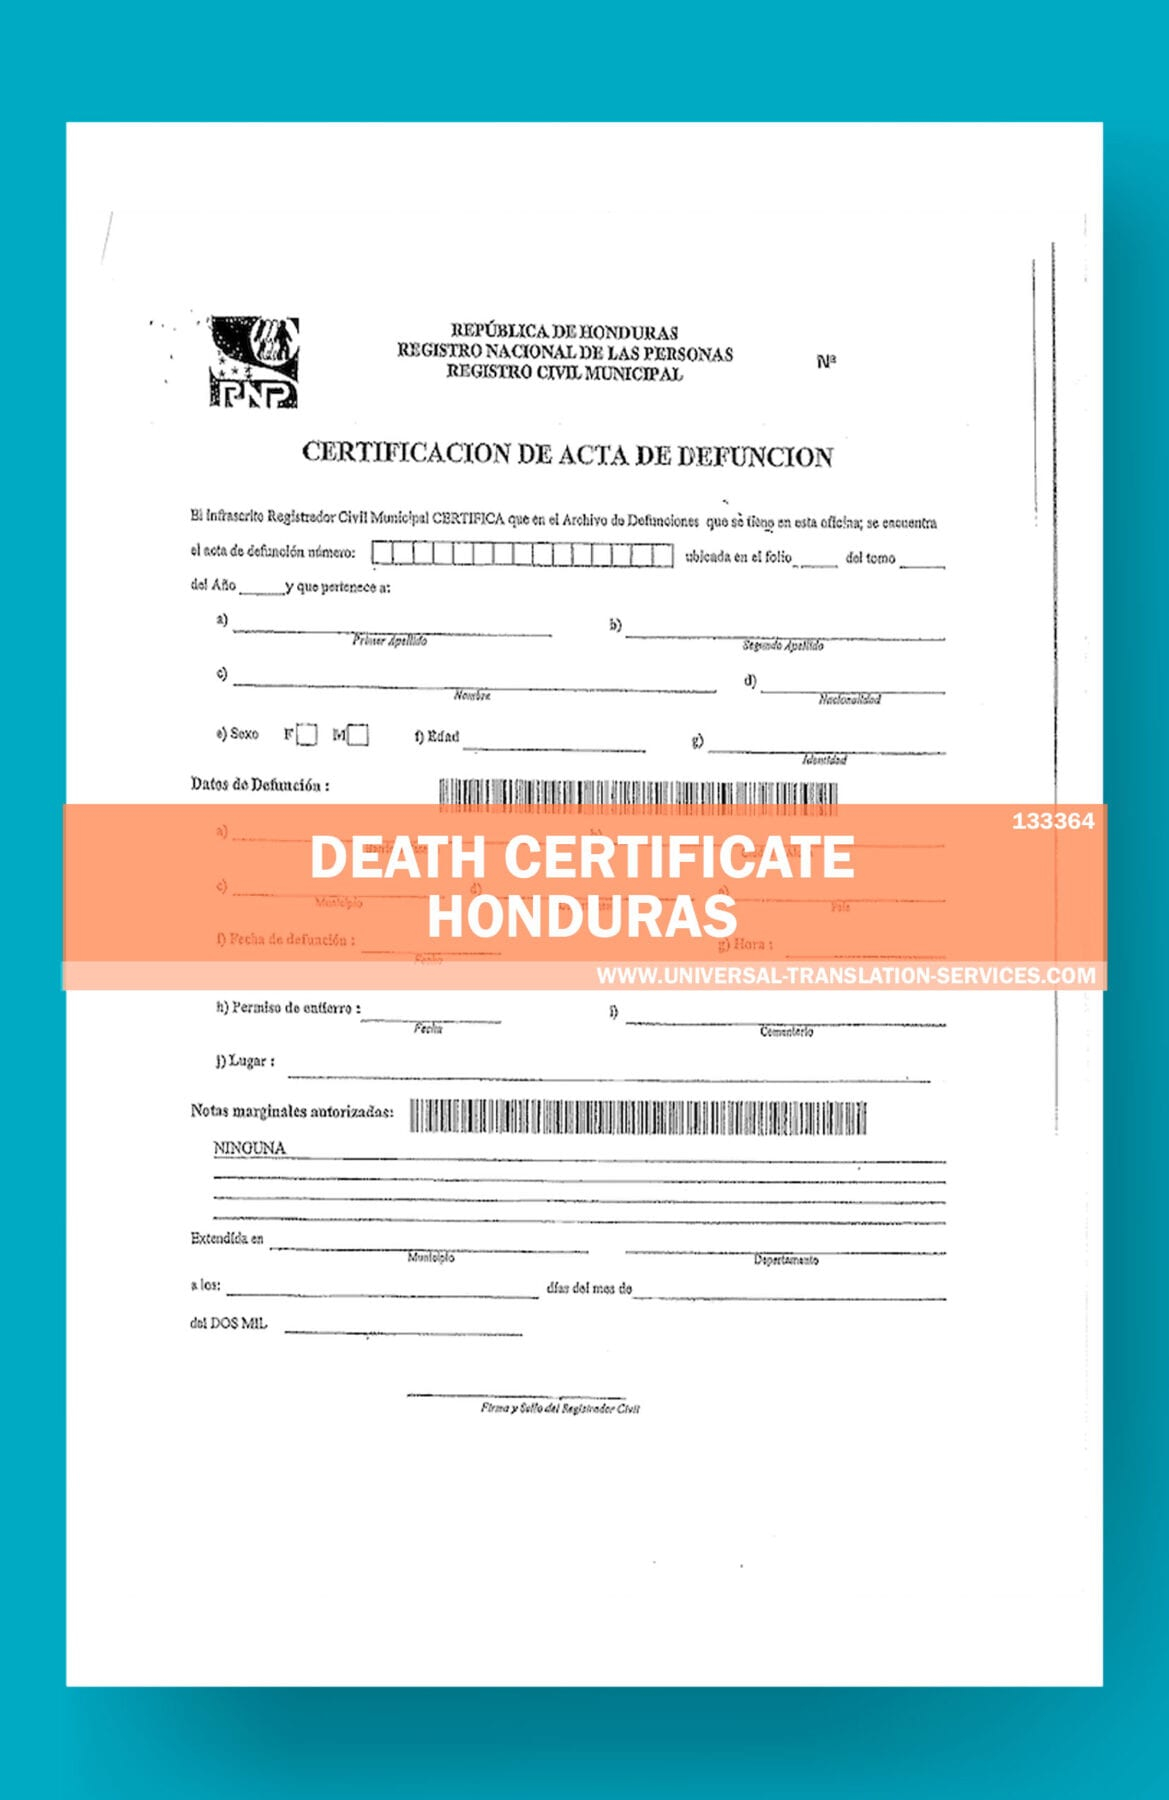 Death Certificate Honduras #10 In Death Certificate Translation Template